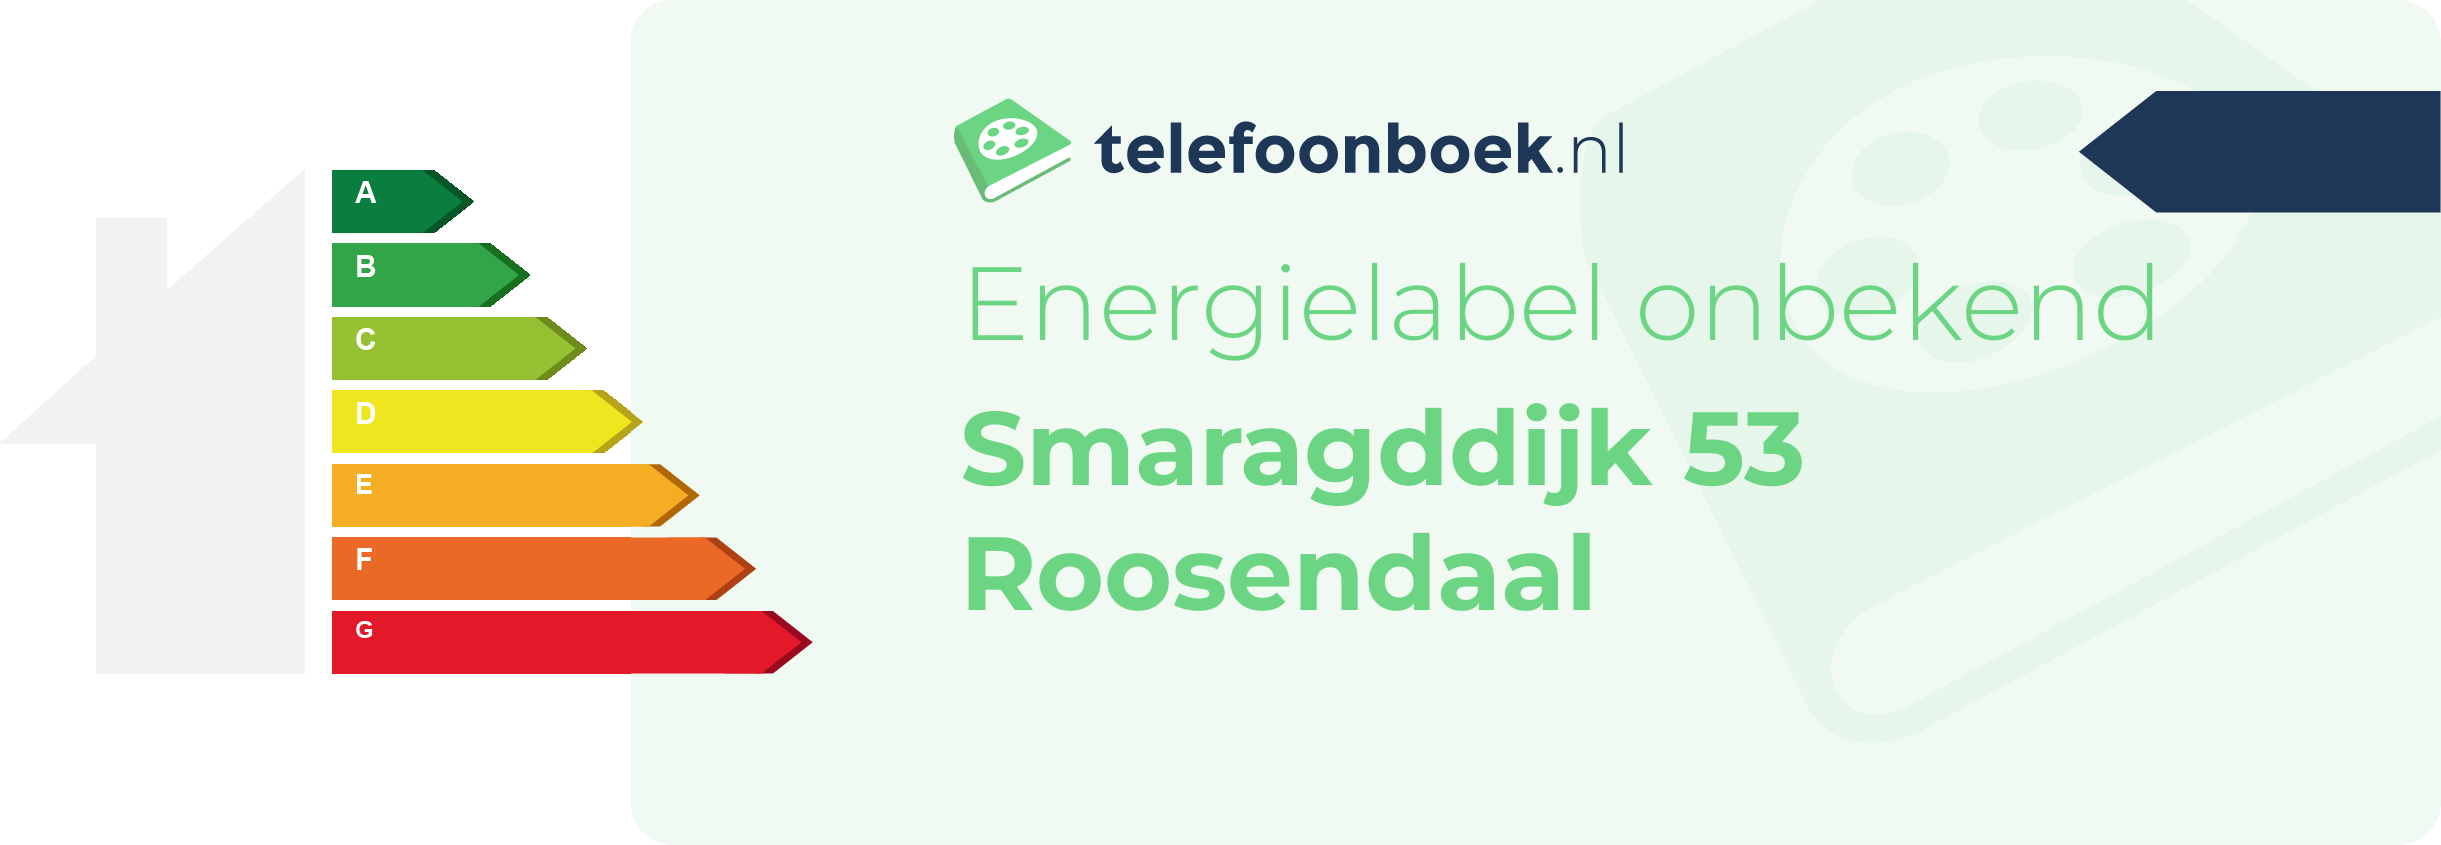 Energielabel Smaragddijk 53 Roosendaal